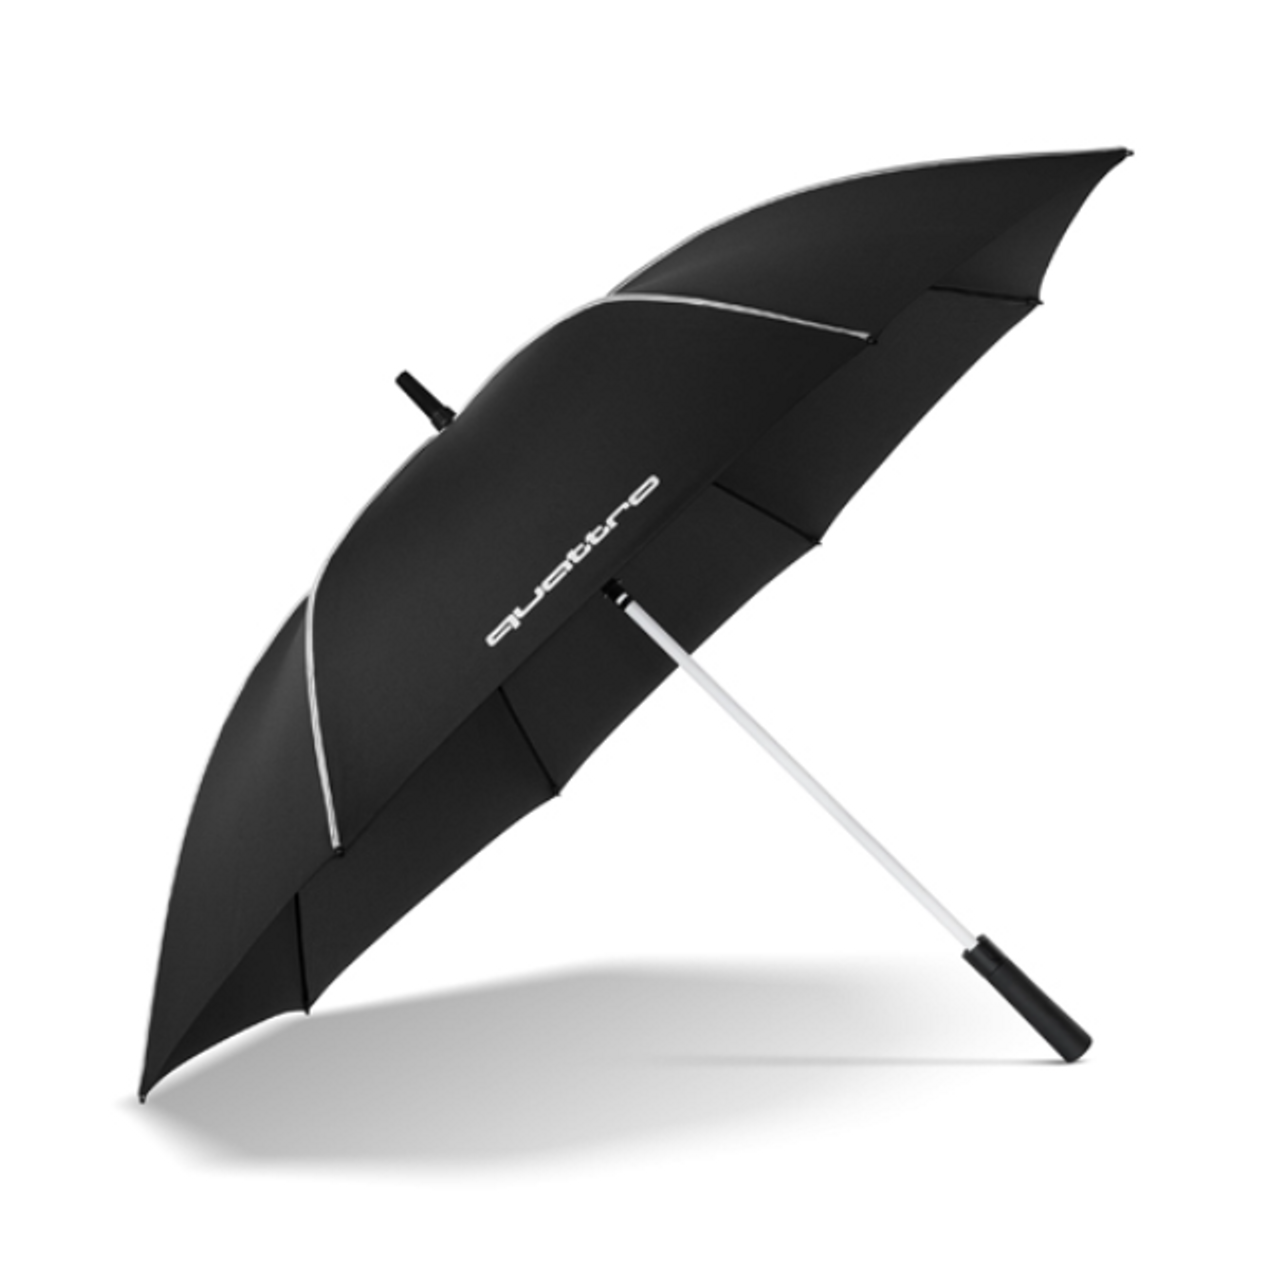 Audi Umbrella Black and white, big, quattro collection - 3122200300